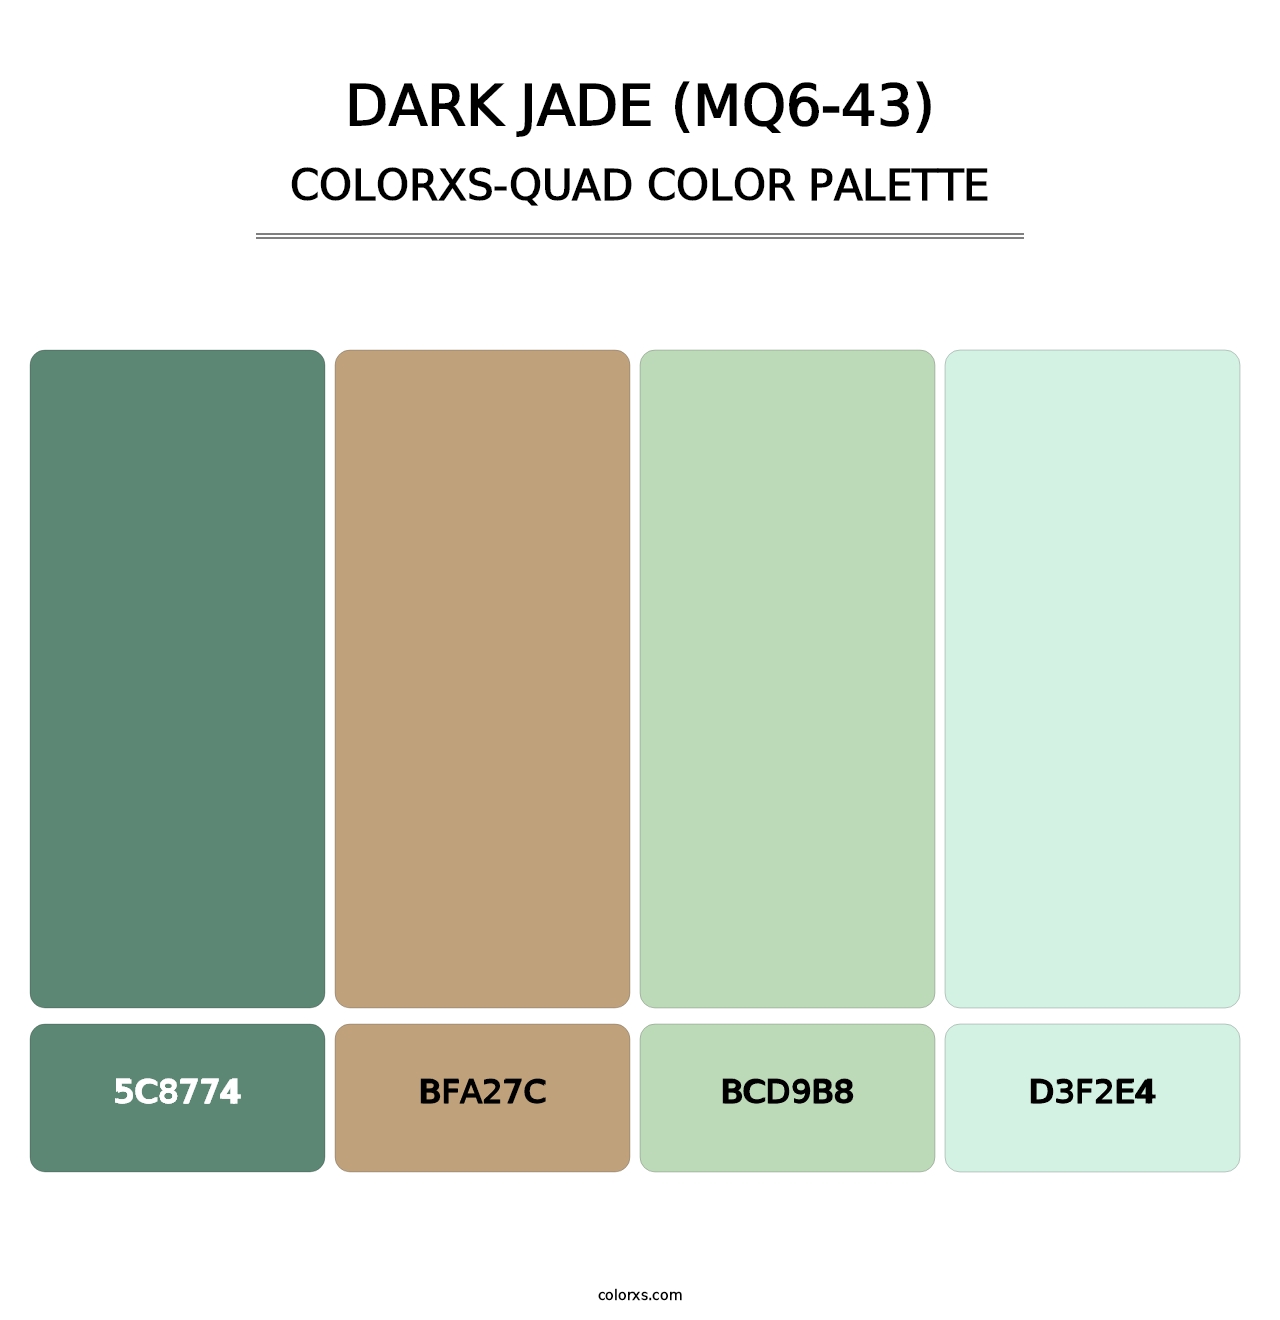 Dark Jade (MQ6-43) - Colorxs Quad Palette